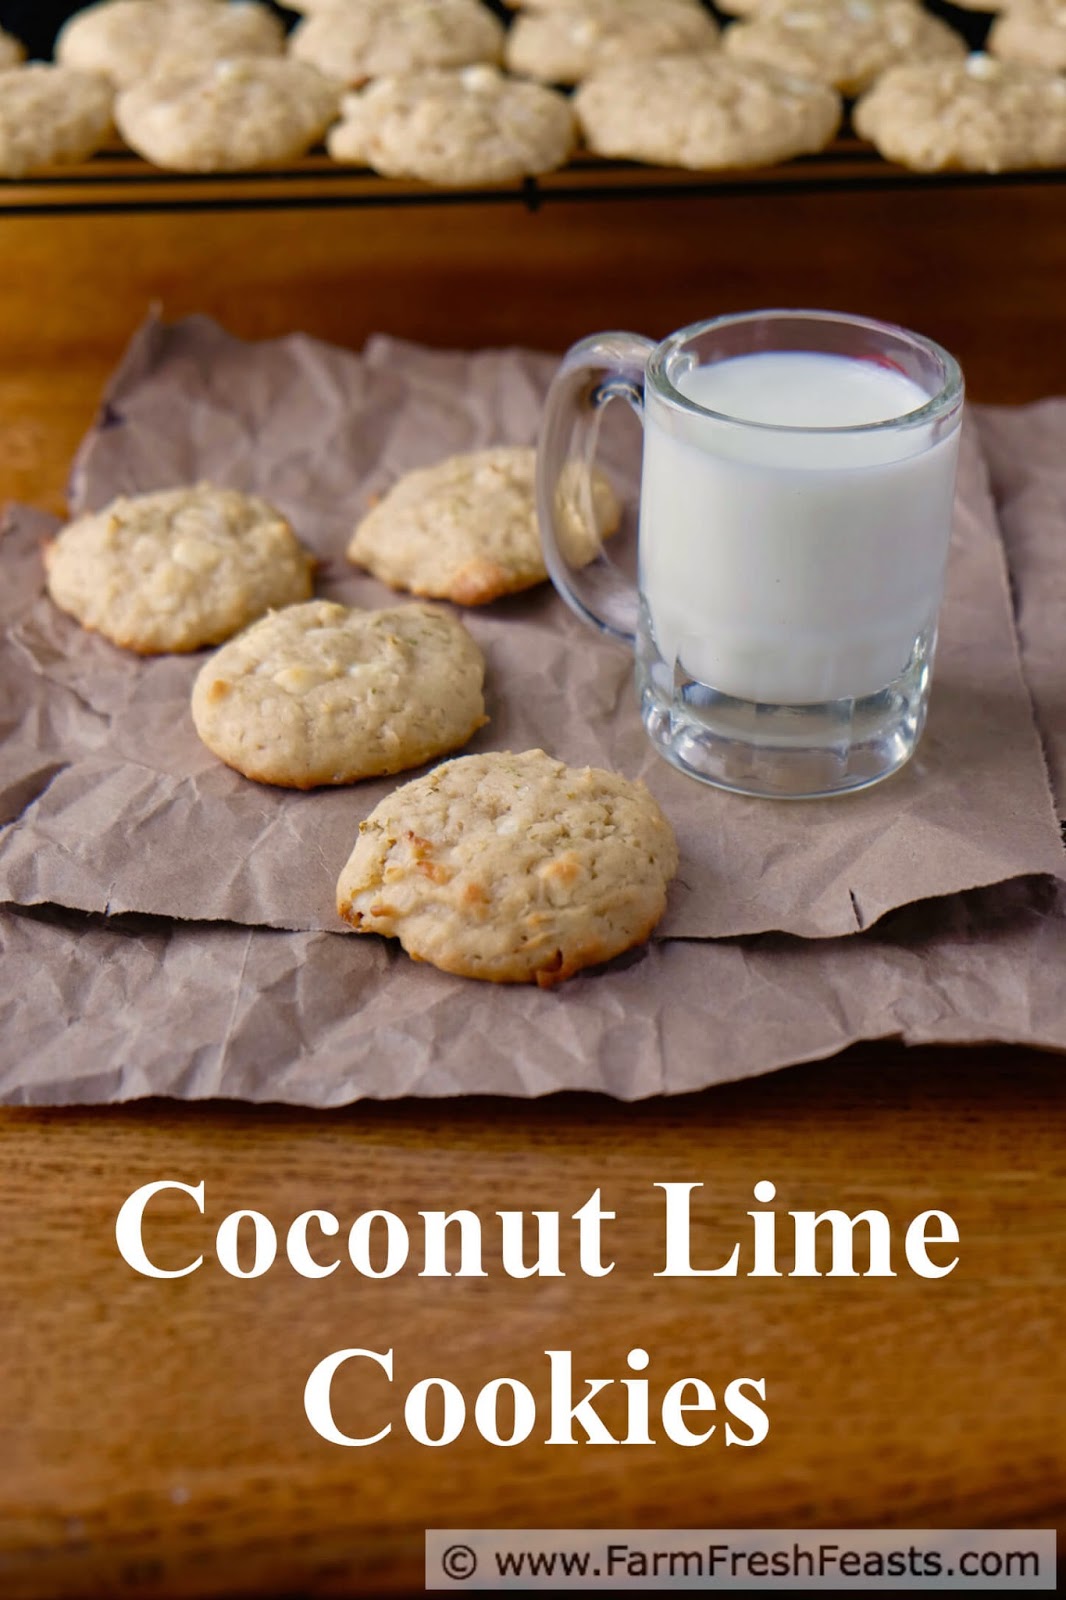 http://www.farmfreshfeasts.com/2015/04/coconut-lime-cookies.html